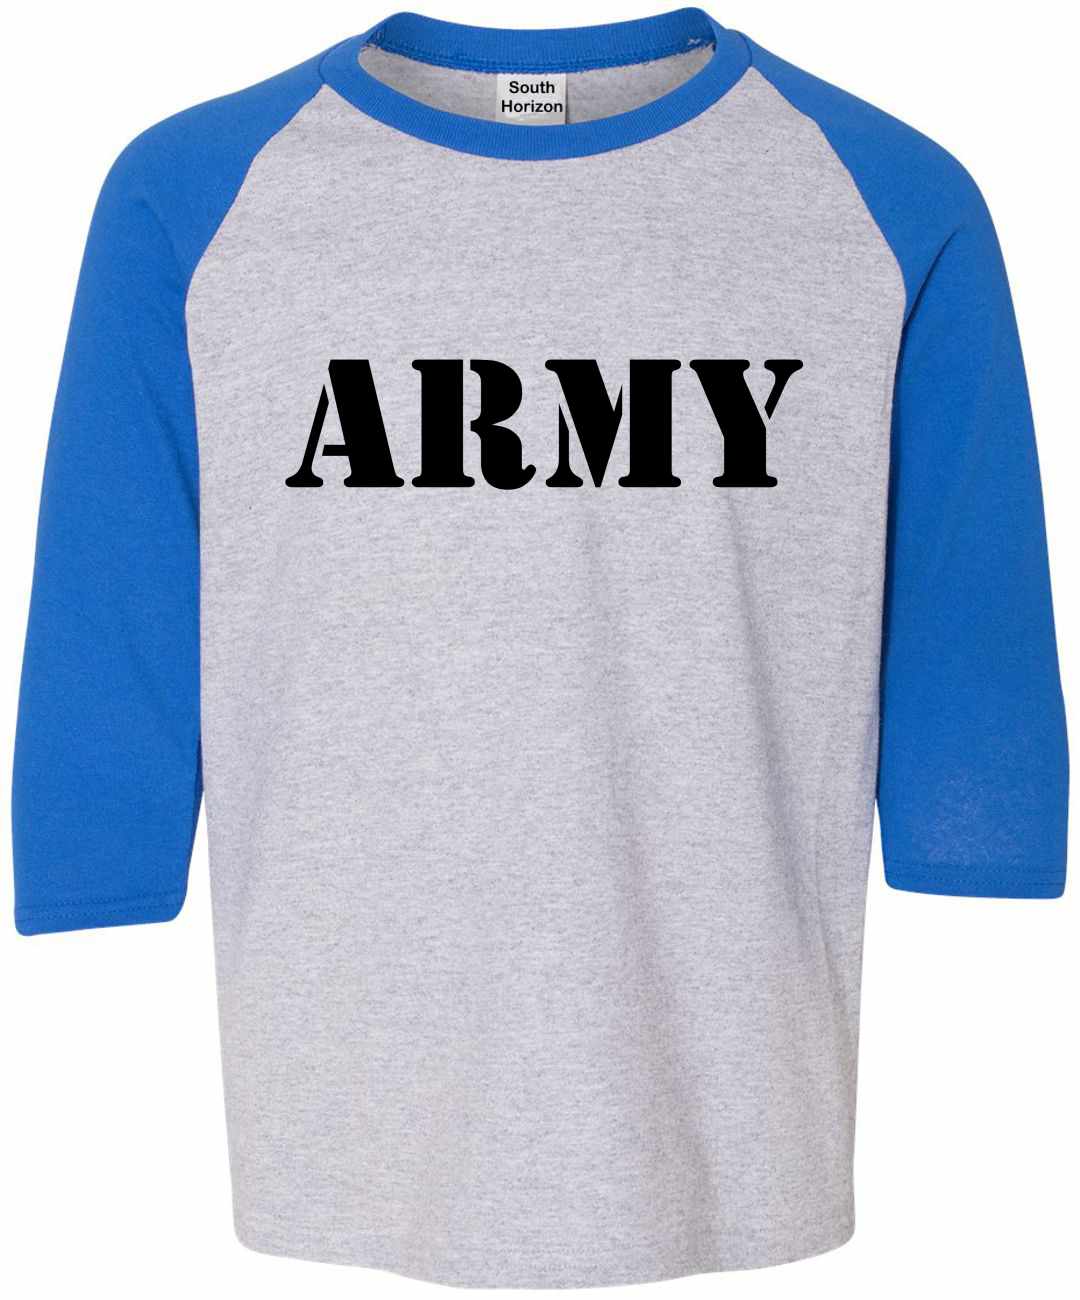 ARMY on Youth Baseball Shirt (#338-212)